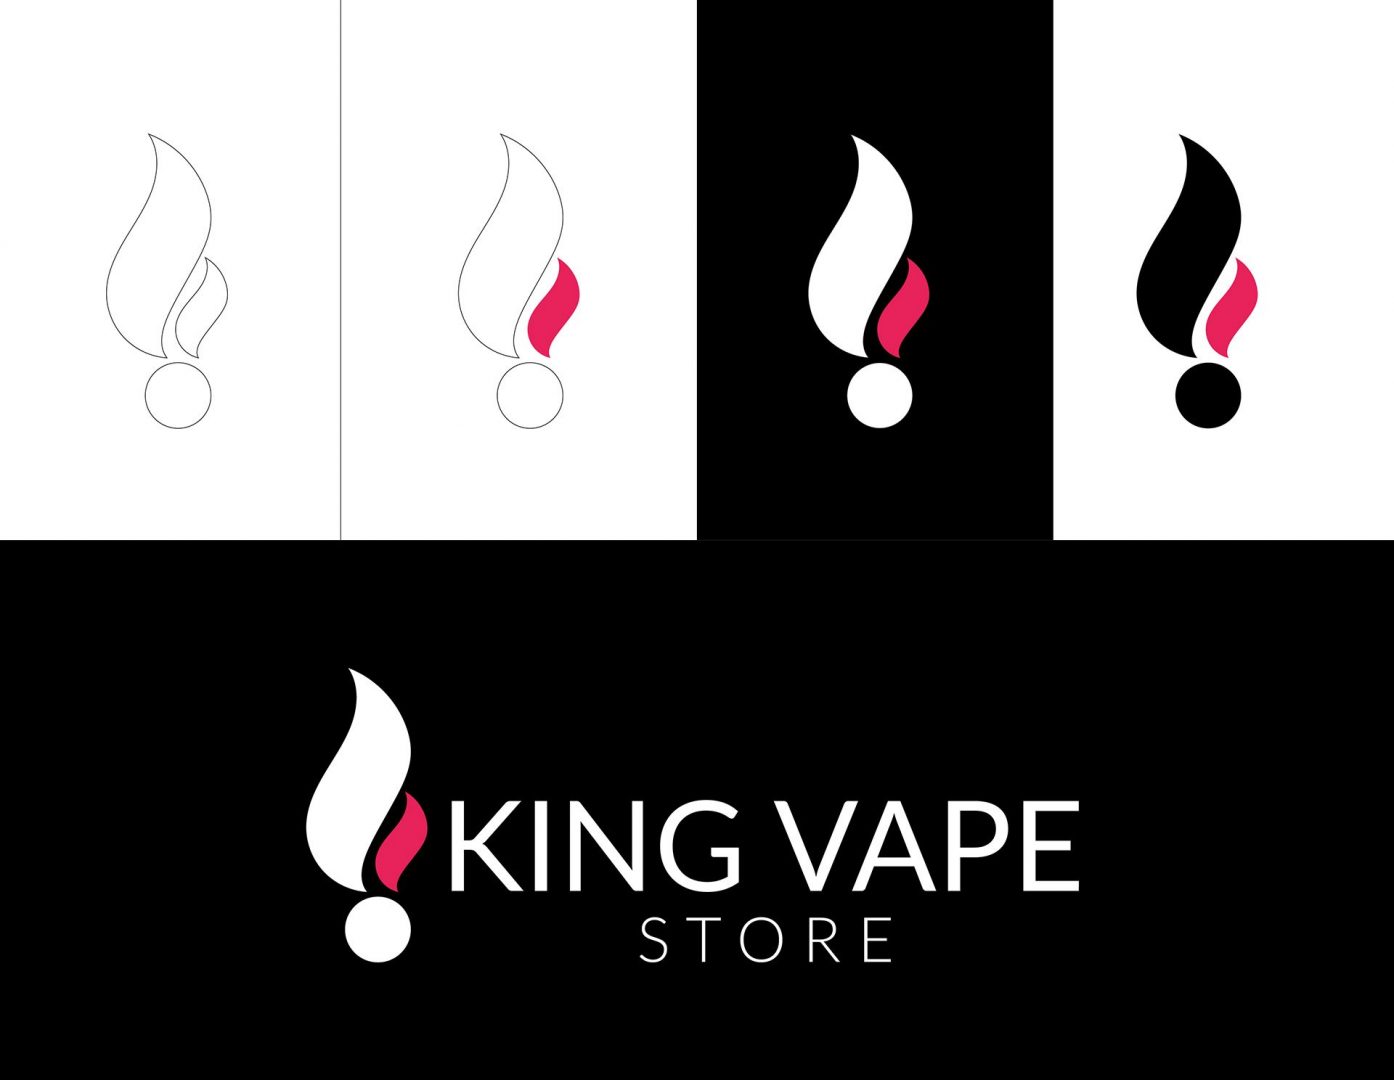 King Vape Store - King Vape Brand Guide 04 - Zera Creative